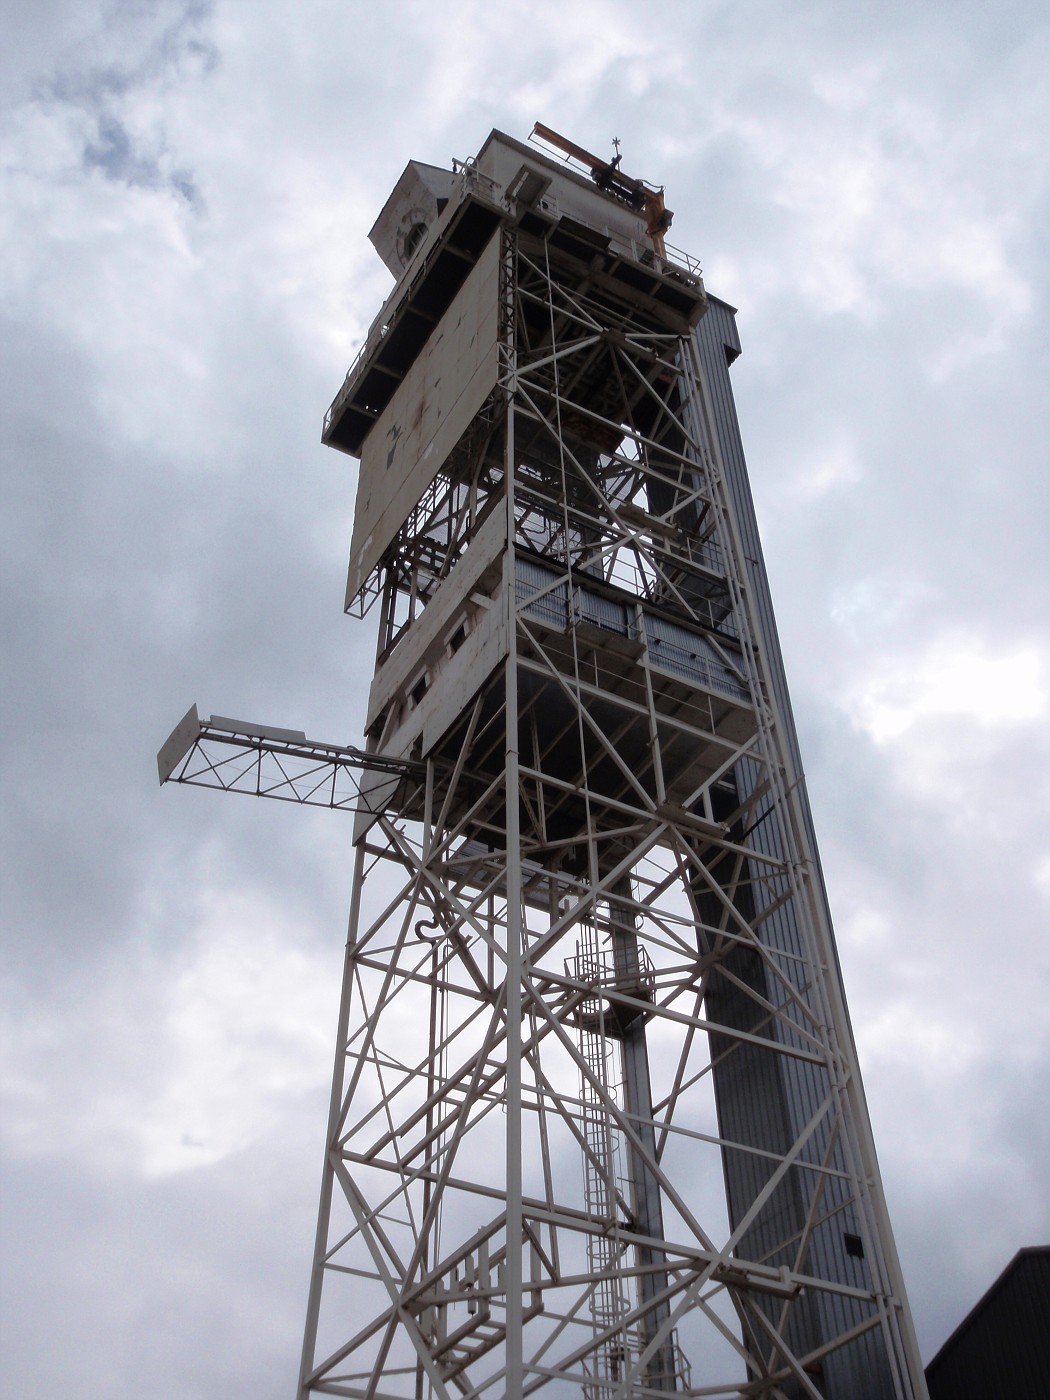 Solar receiving tower